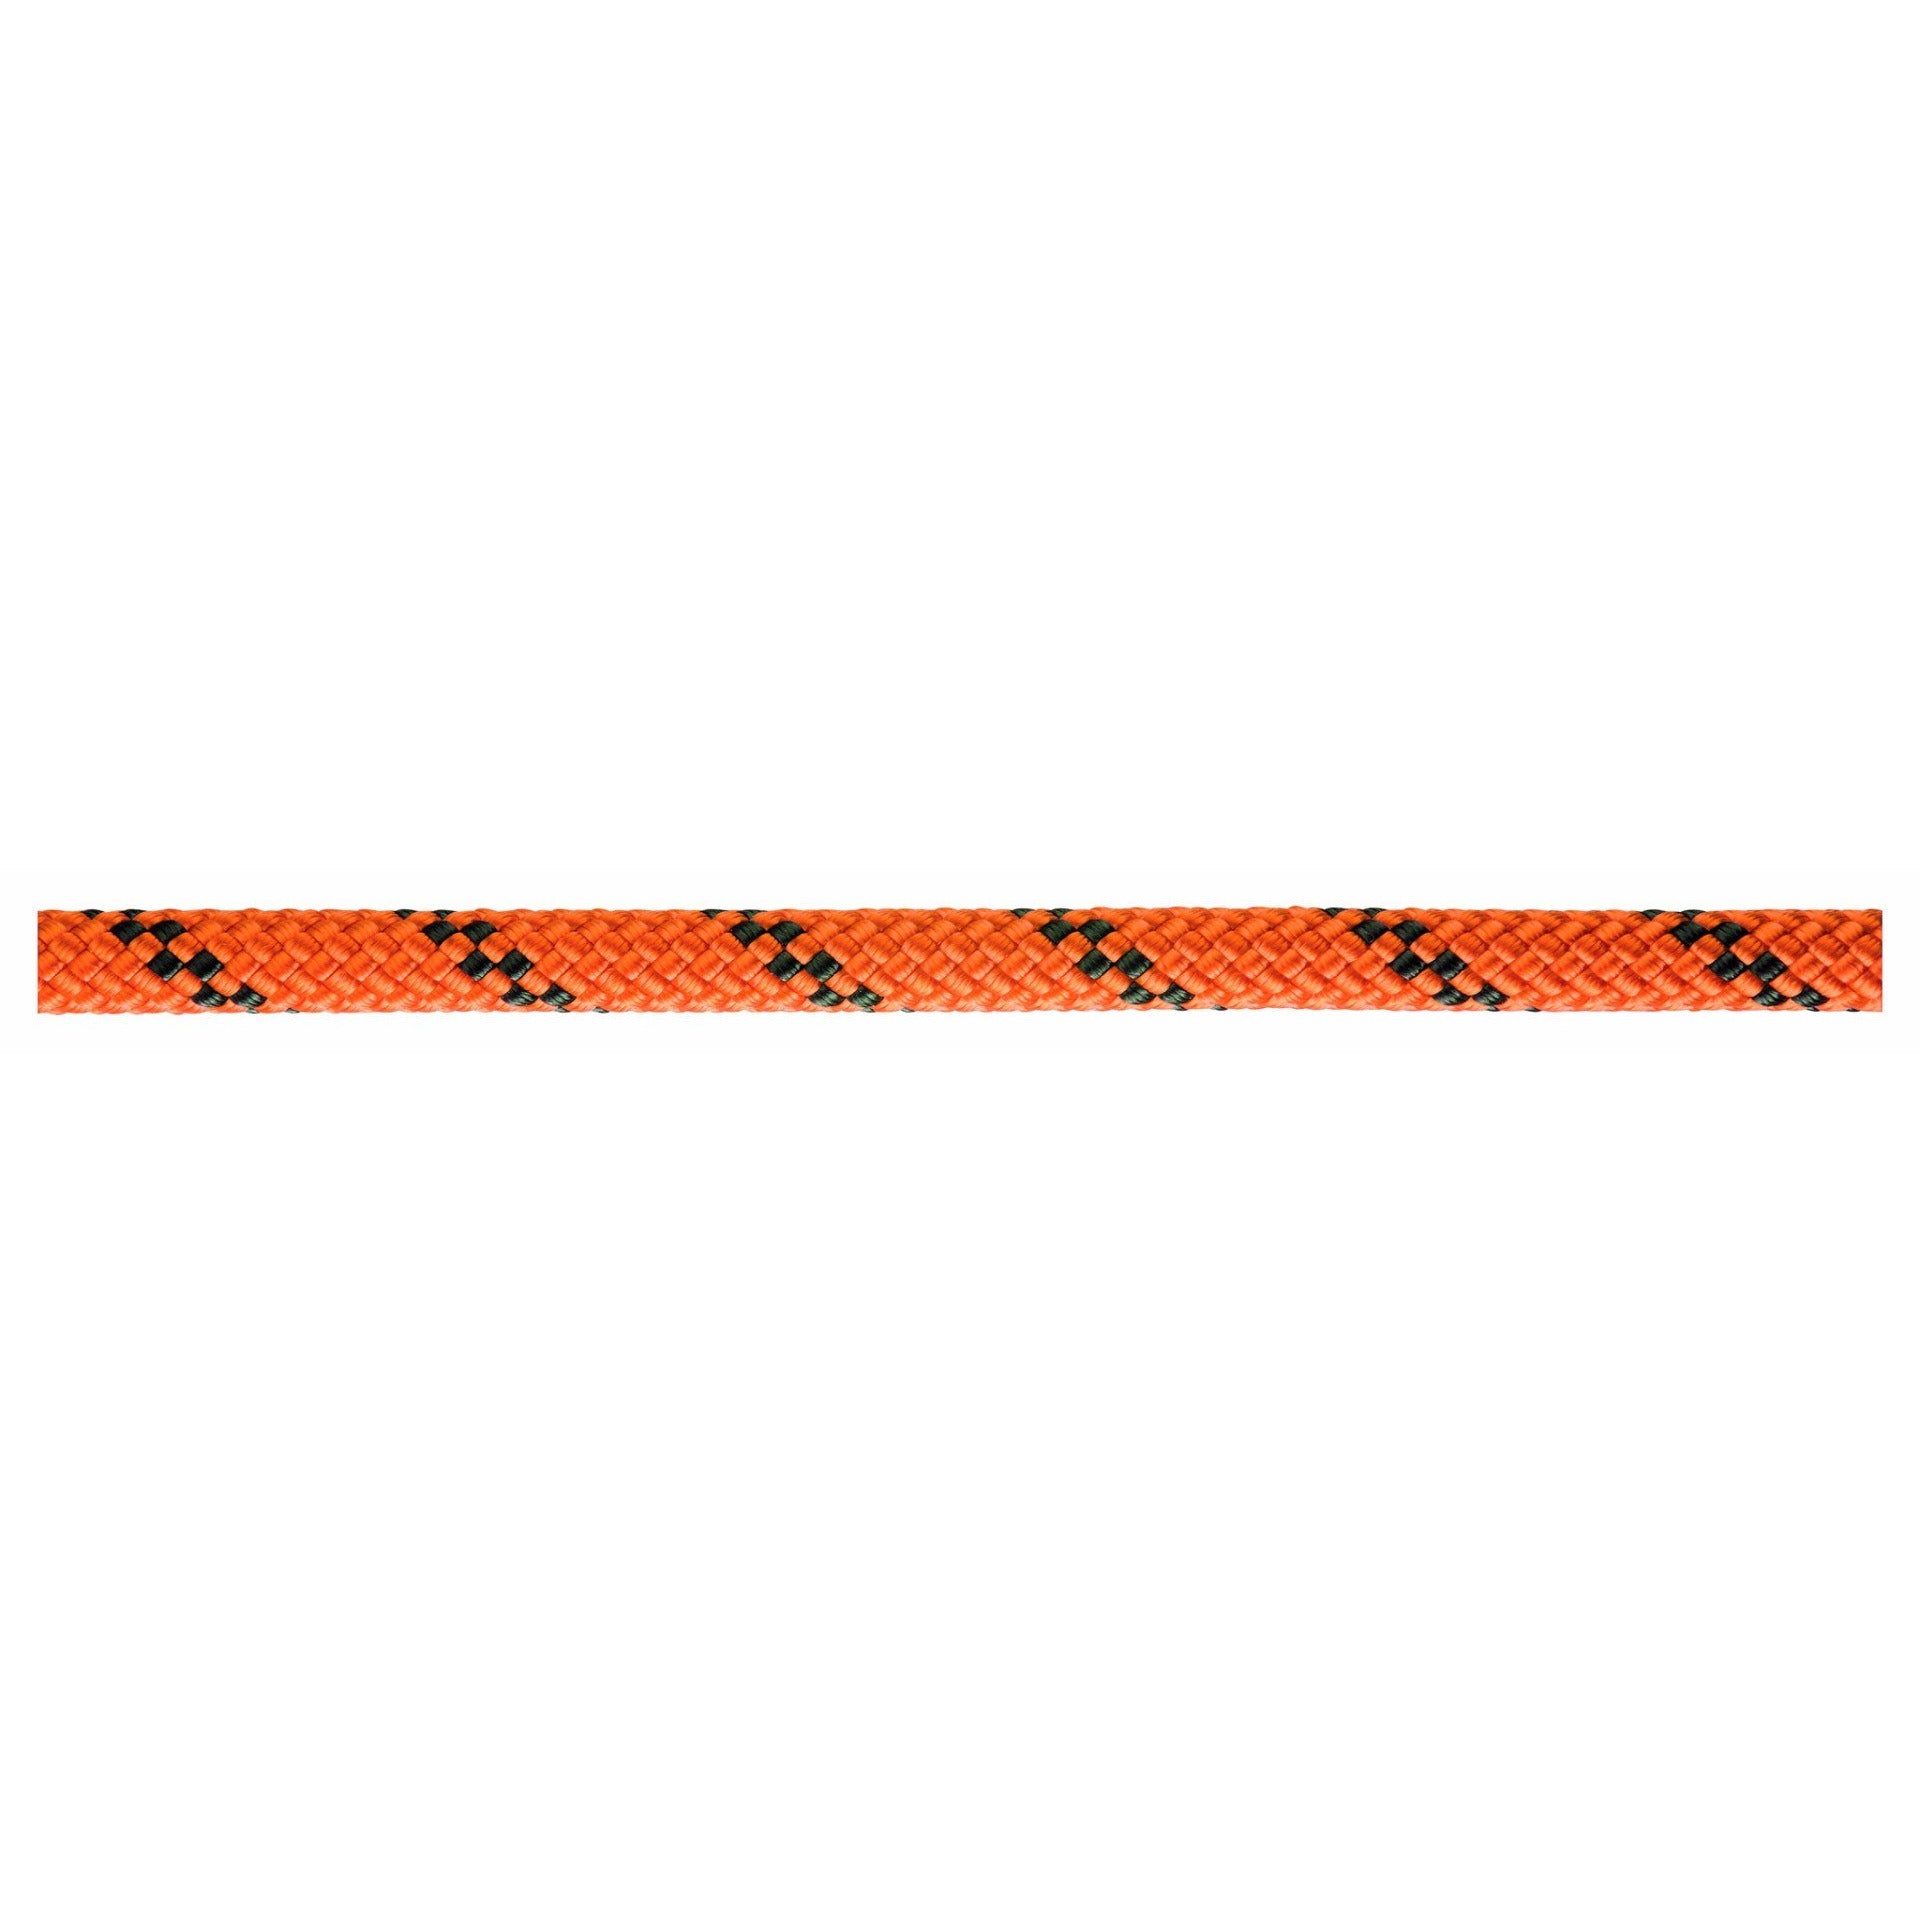 11mm Orange LSK Static Rope - 100m Reel by Ropes Direct